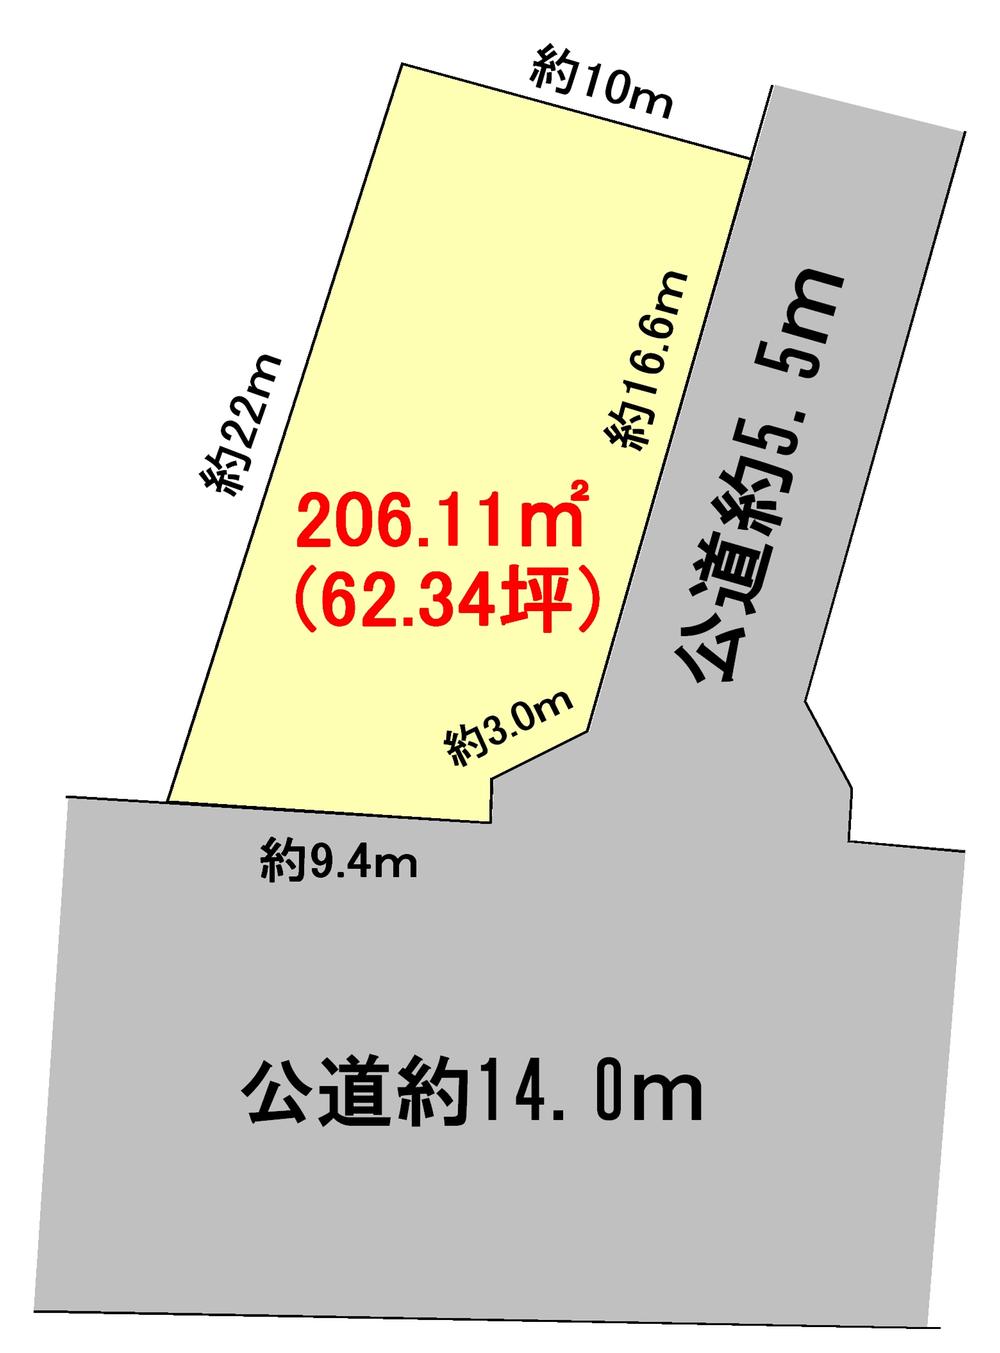 Compartment figure. Land price 6.9 million yen, Land area 207.89 sq m